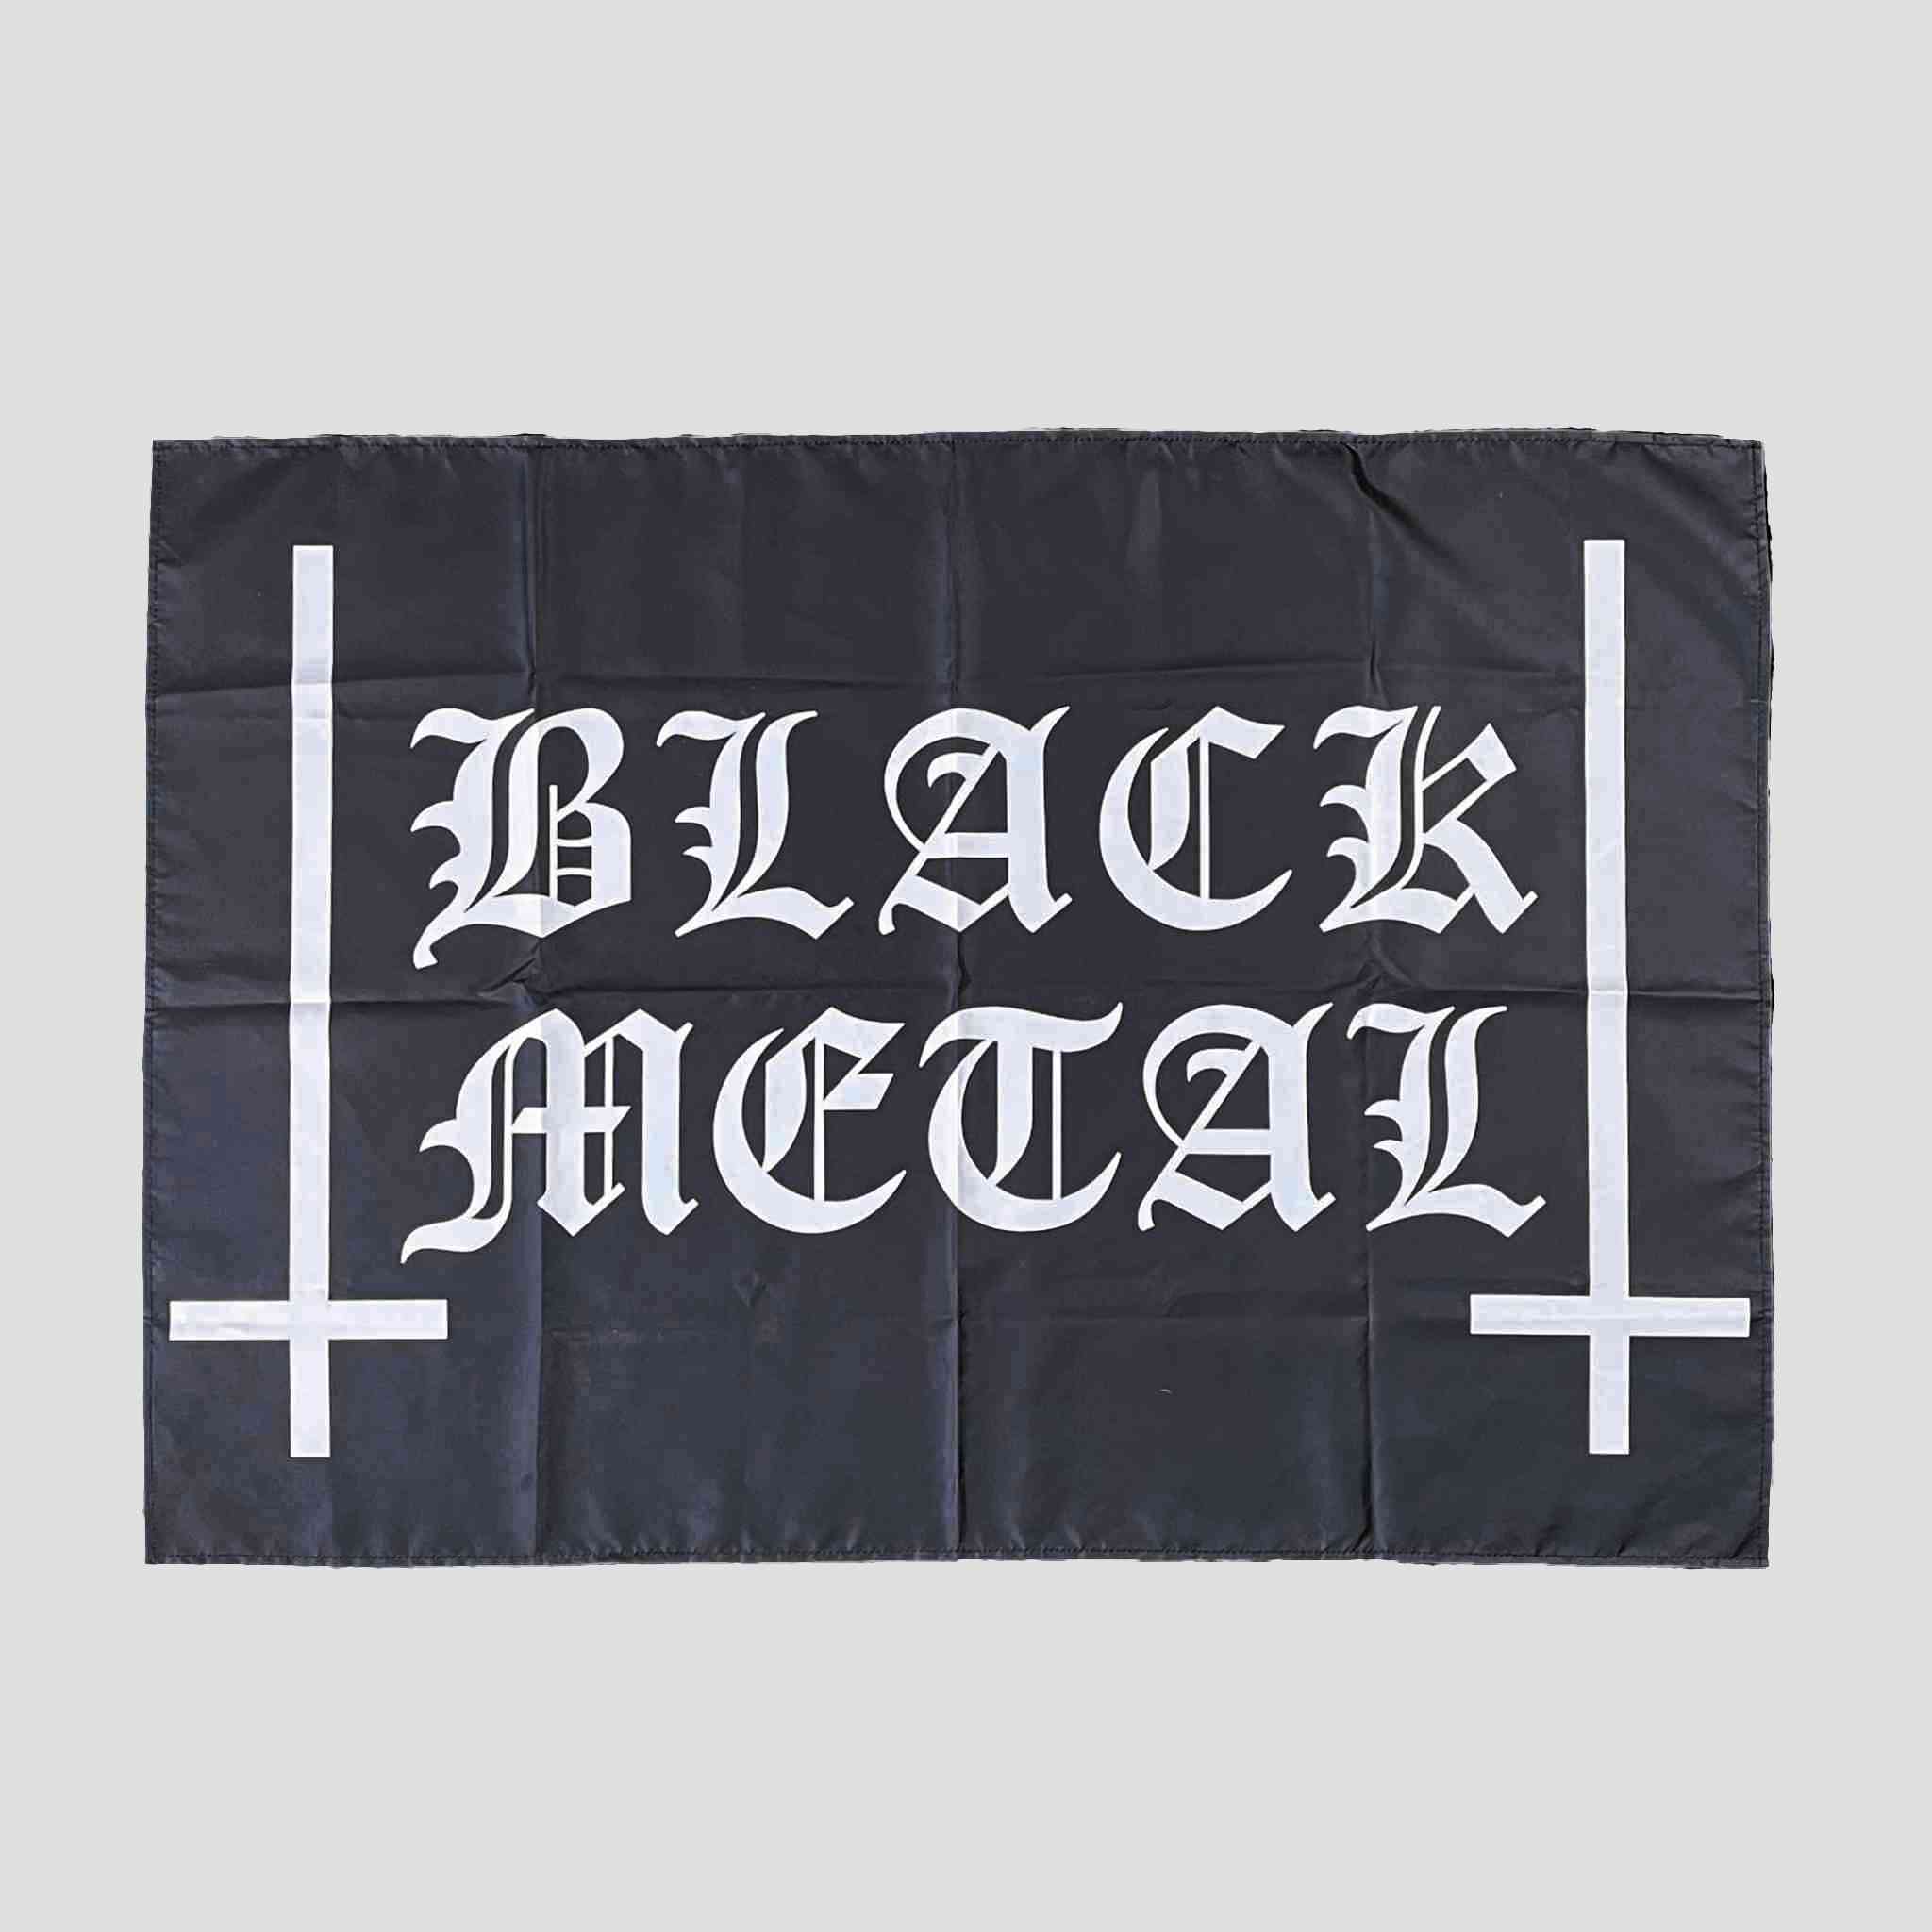 Black Metal Flag